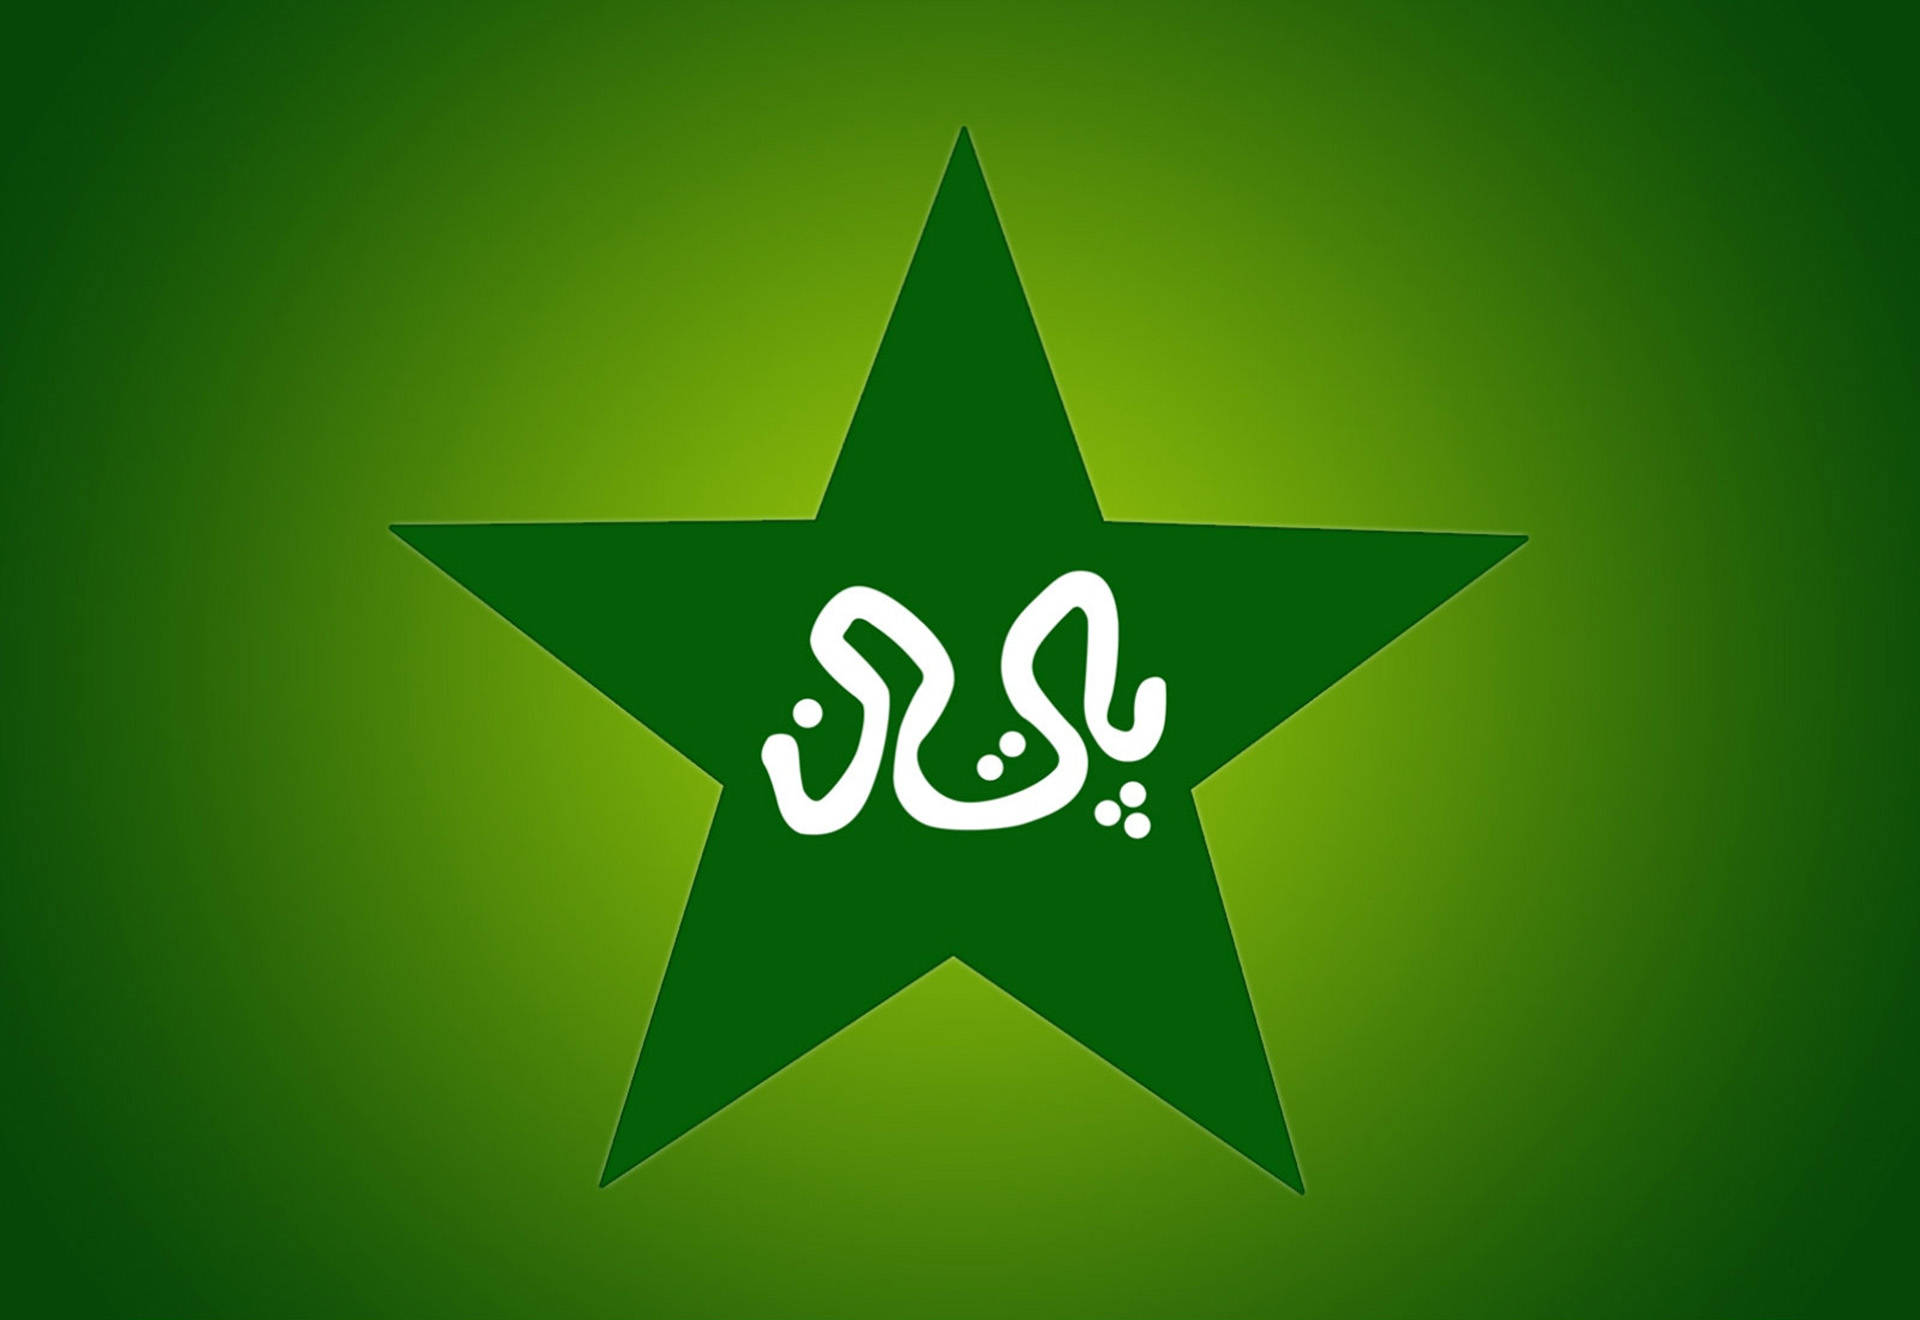 Pakistan Cricket Wallpaper